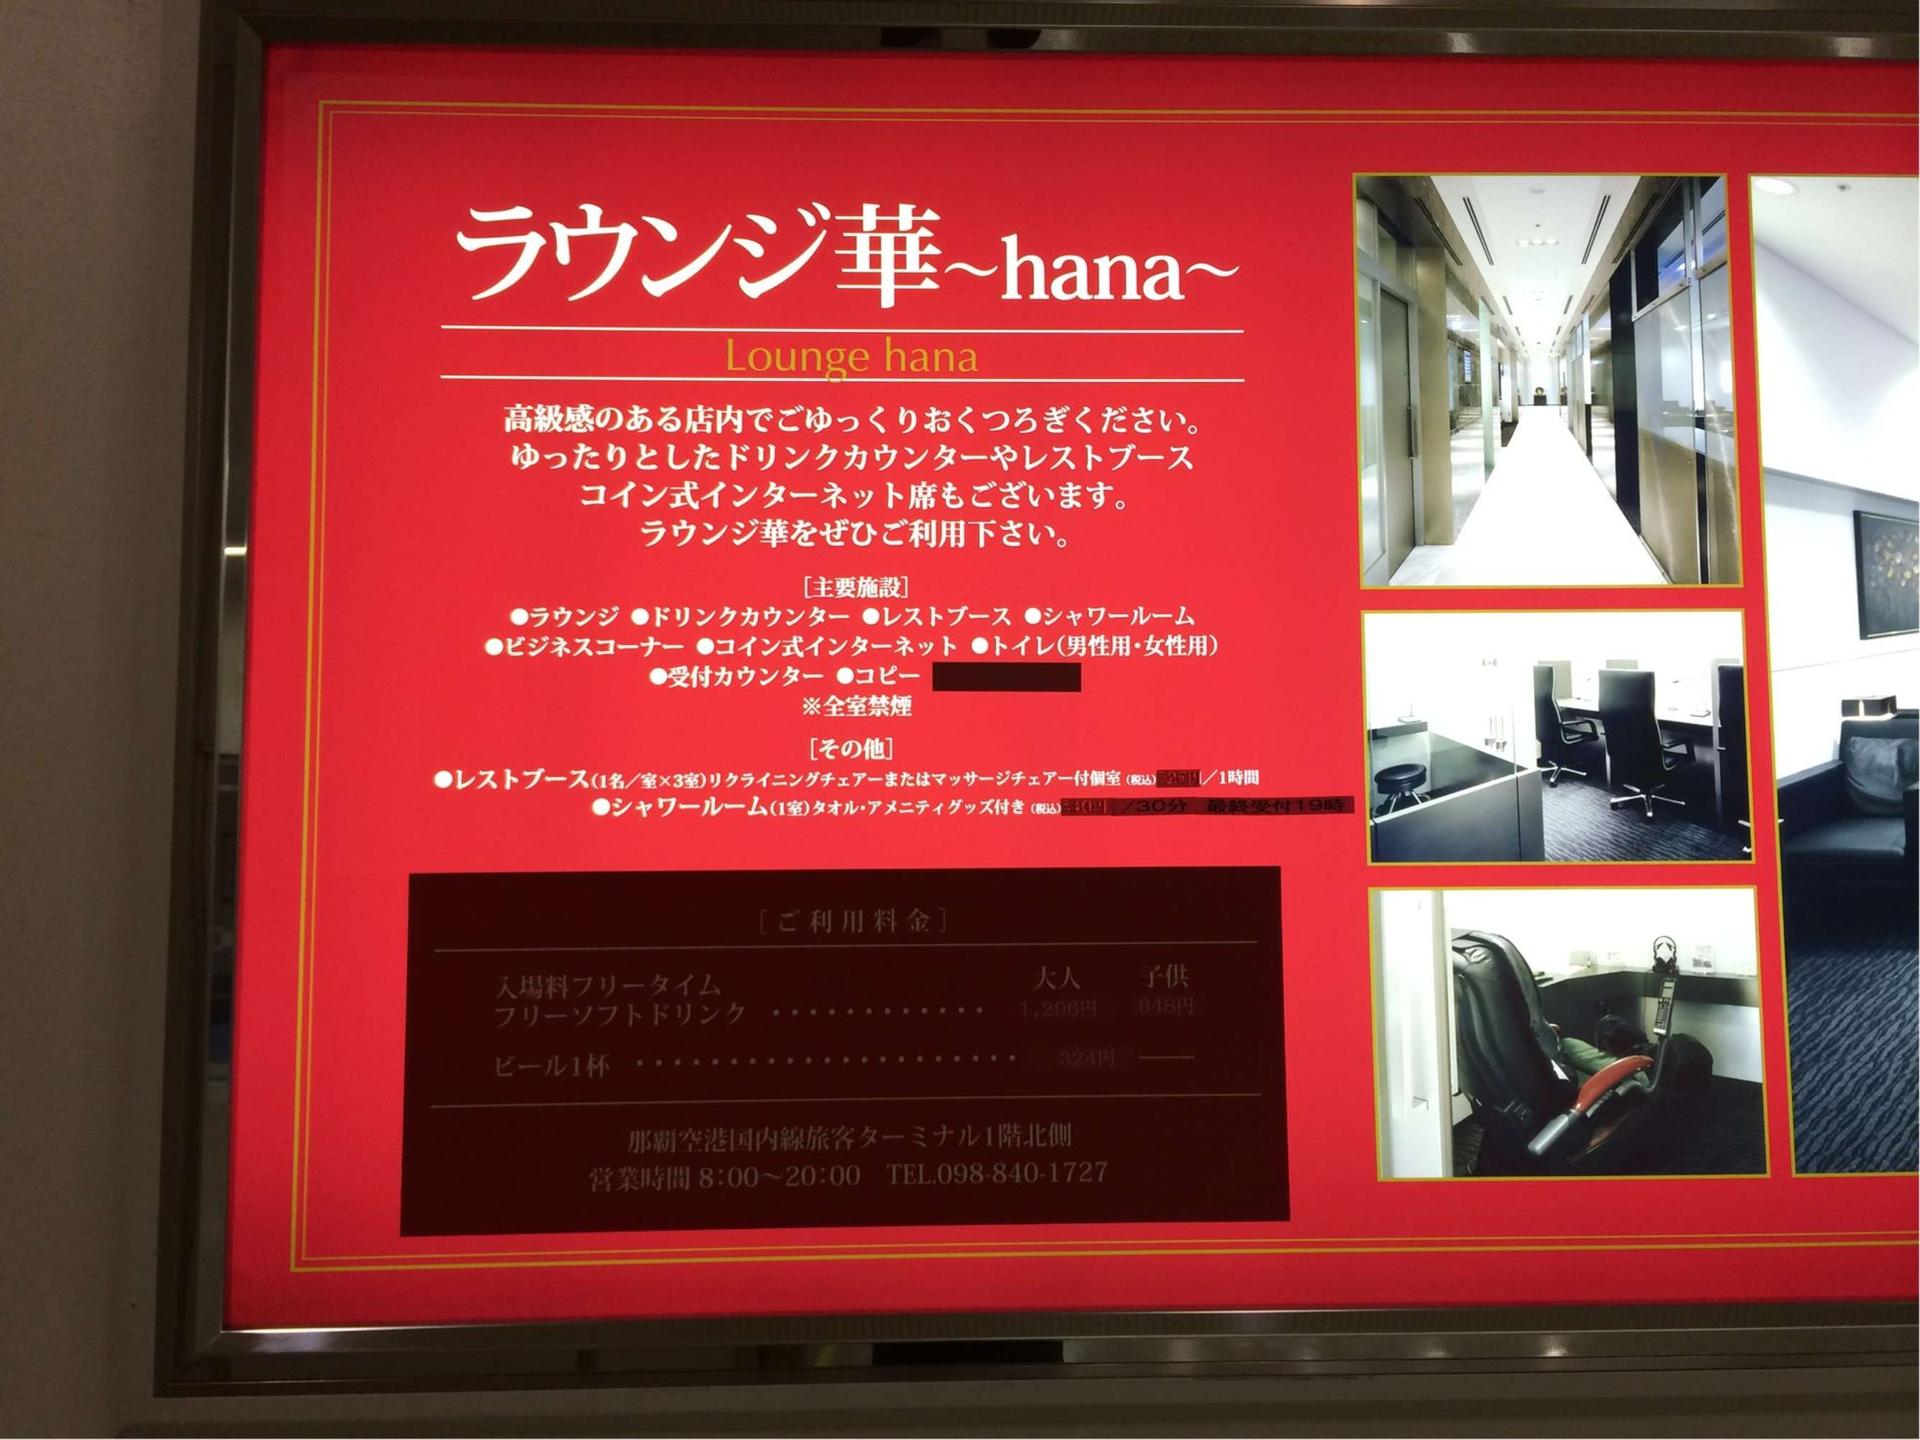 Lounge Hana image 5 of 5